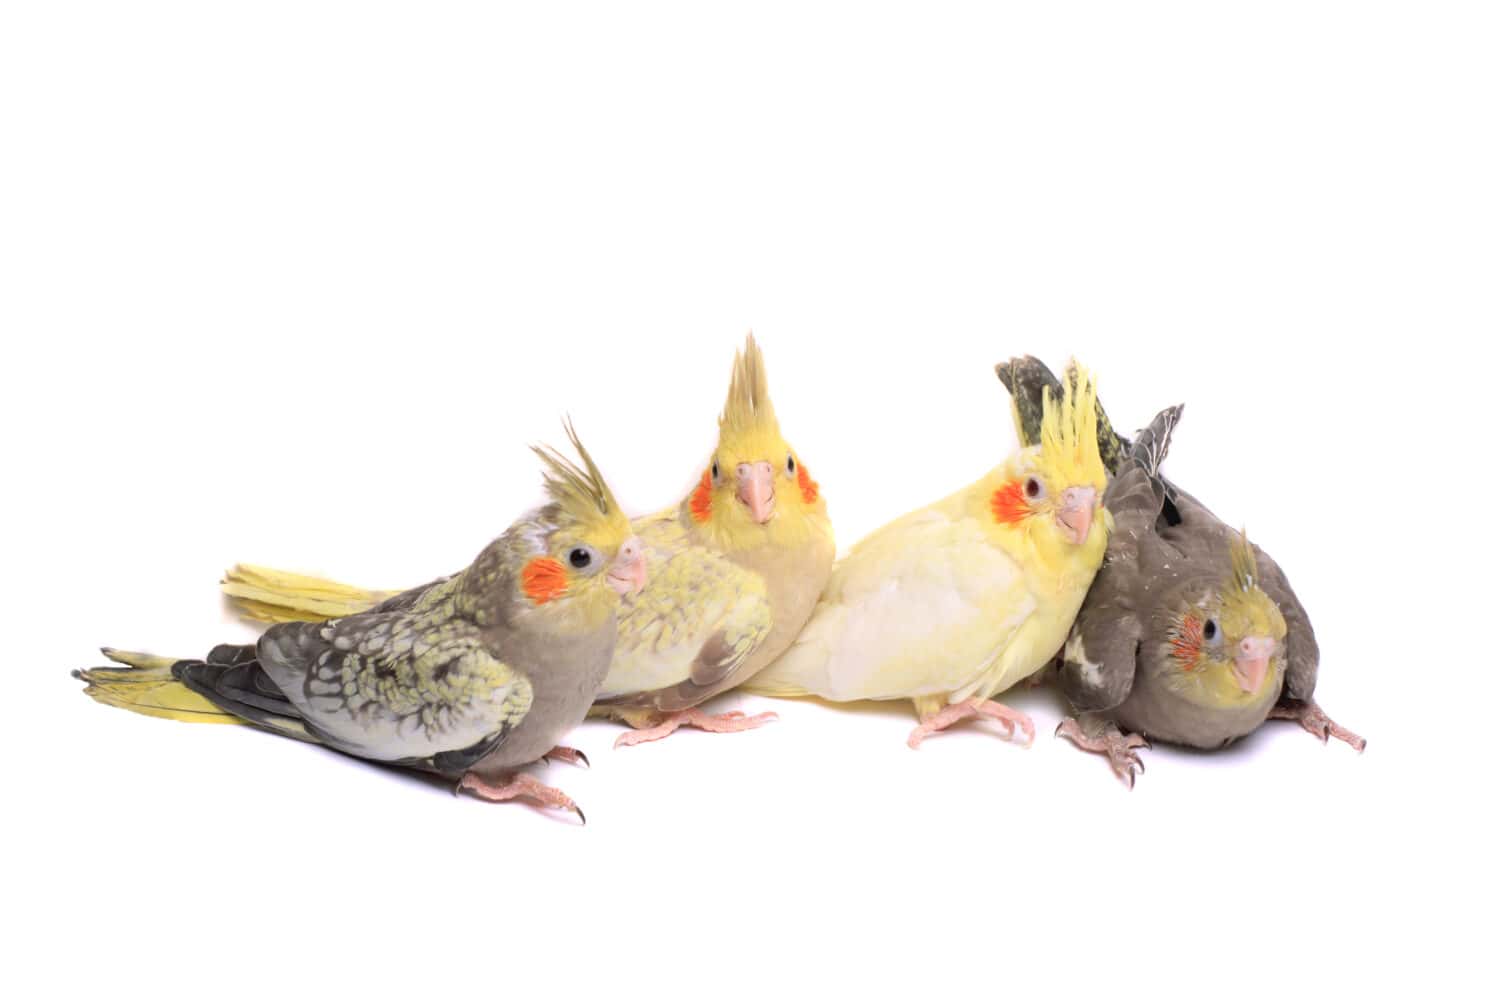 Four cockatiel babies